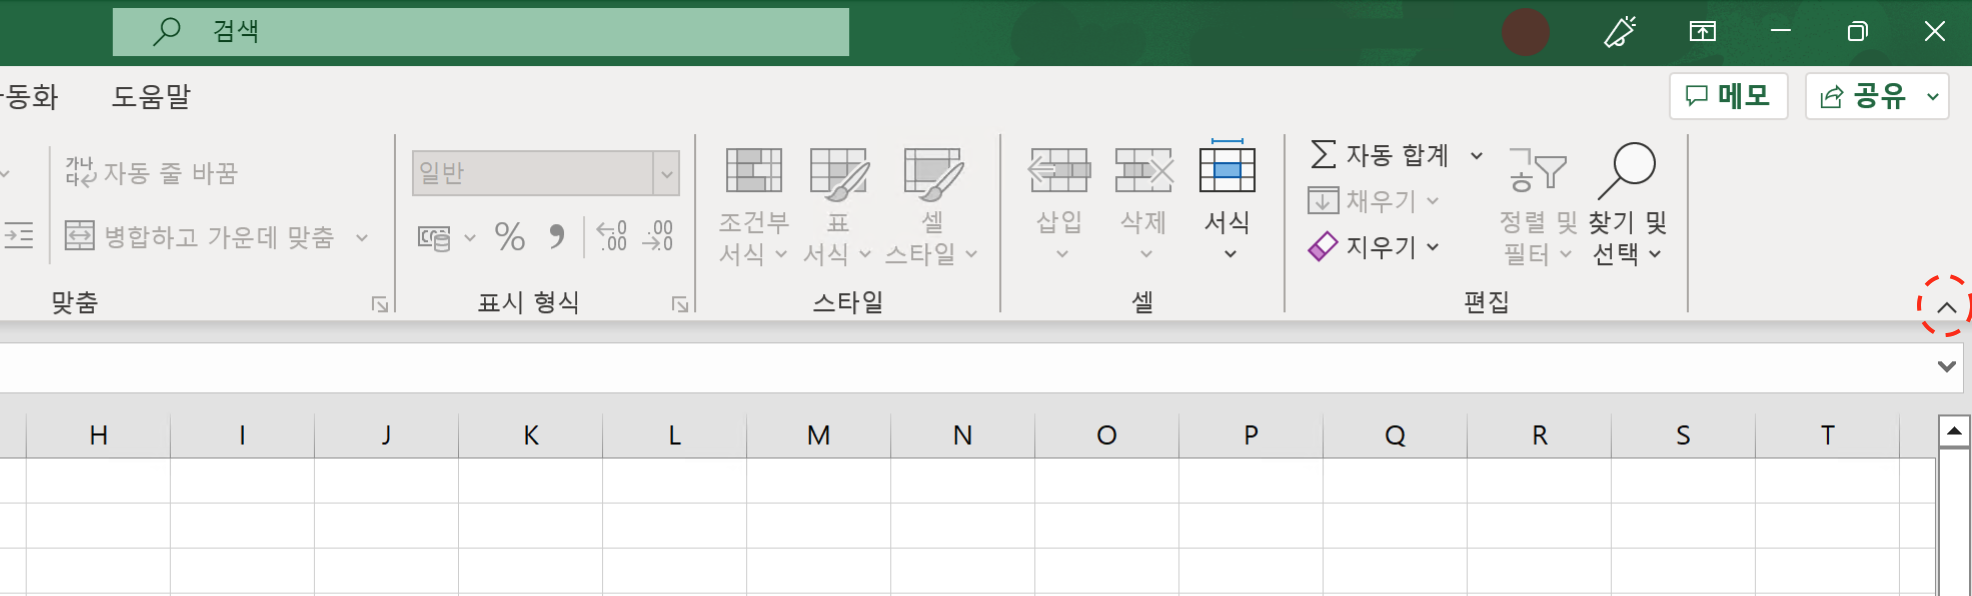 Excel 리본